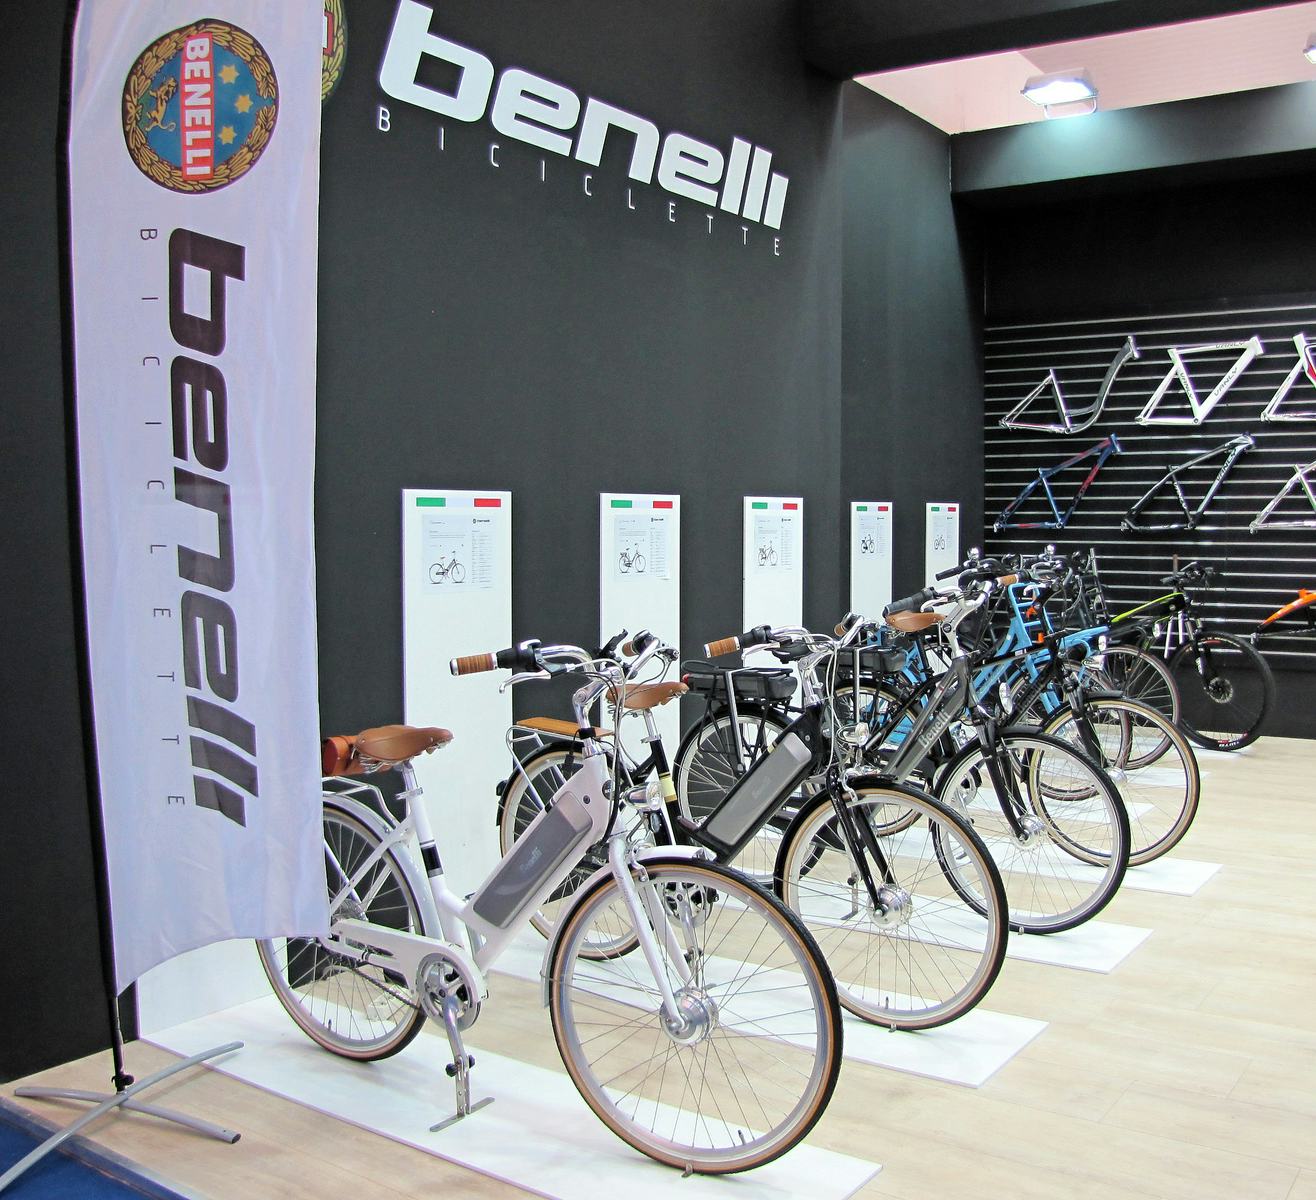 Benelli offers a full range of e-bikes. - Photo Bike Europe